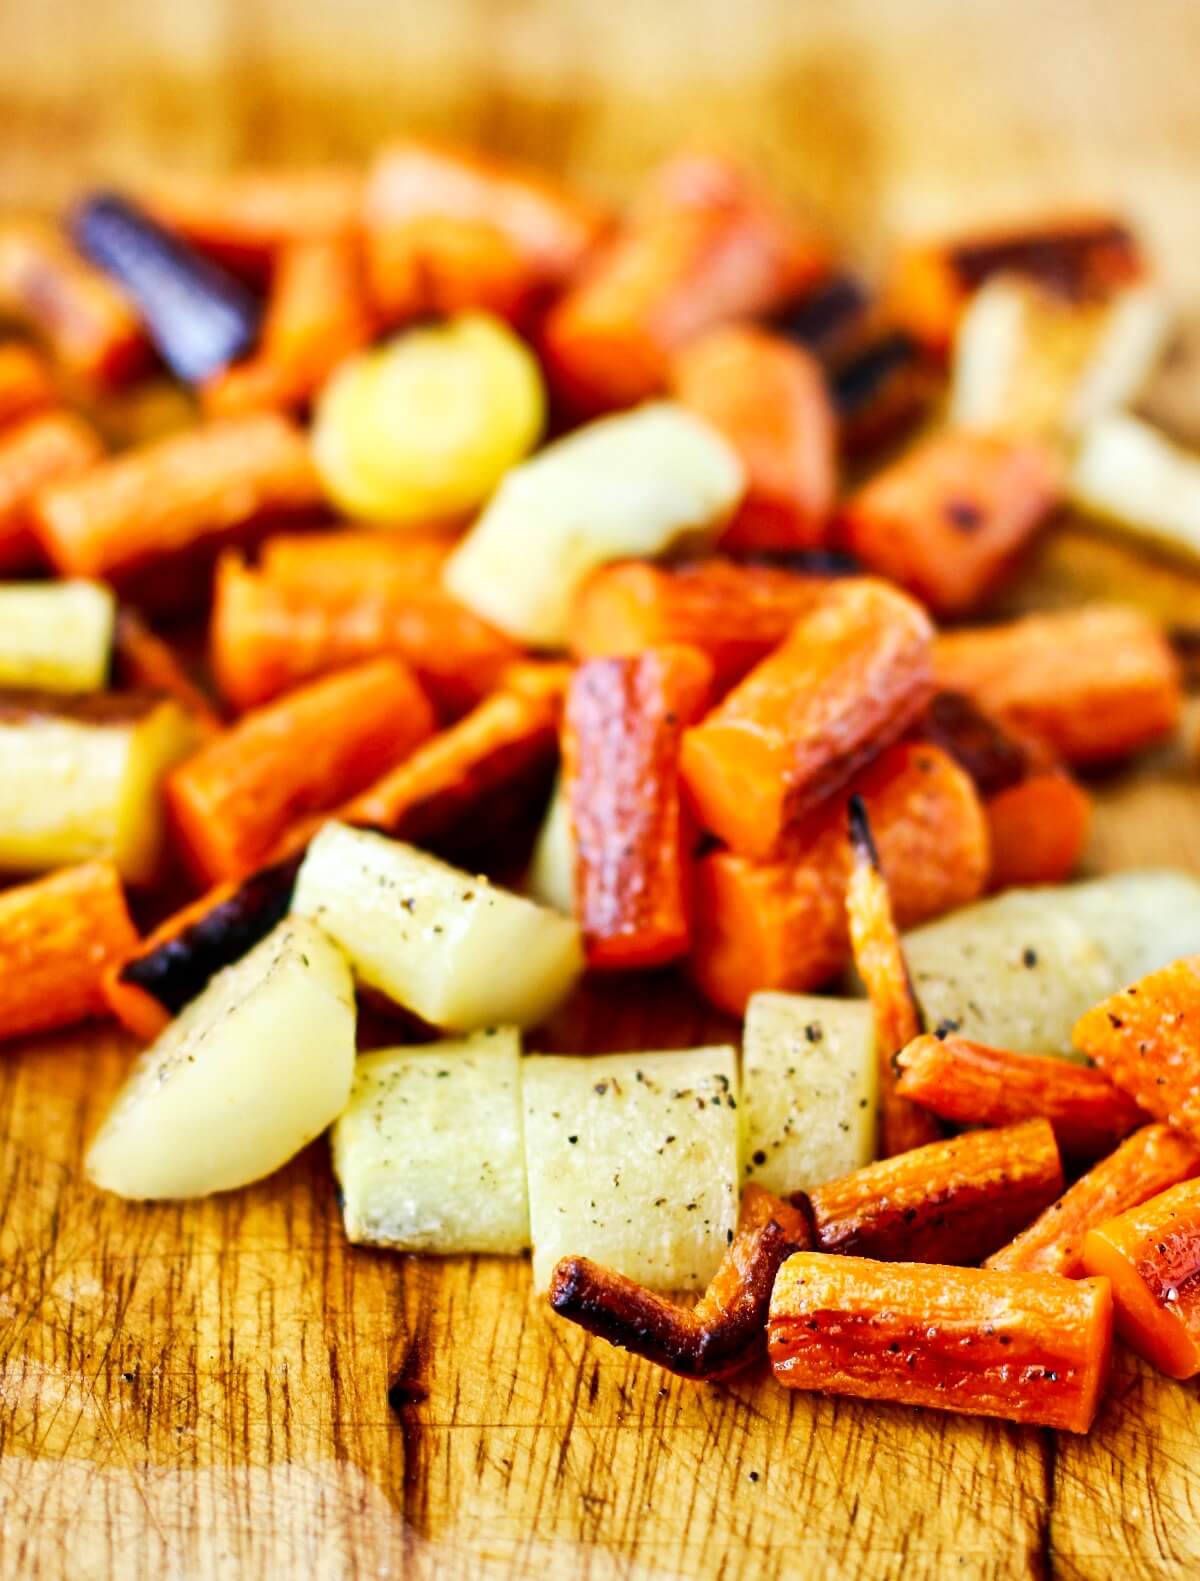 Roasted carrots in roasting pan